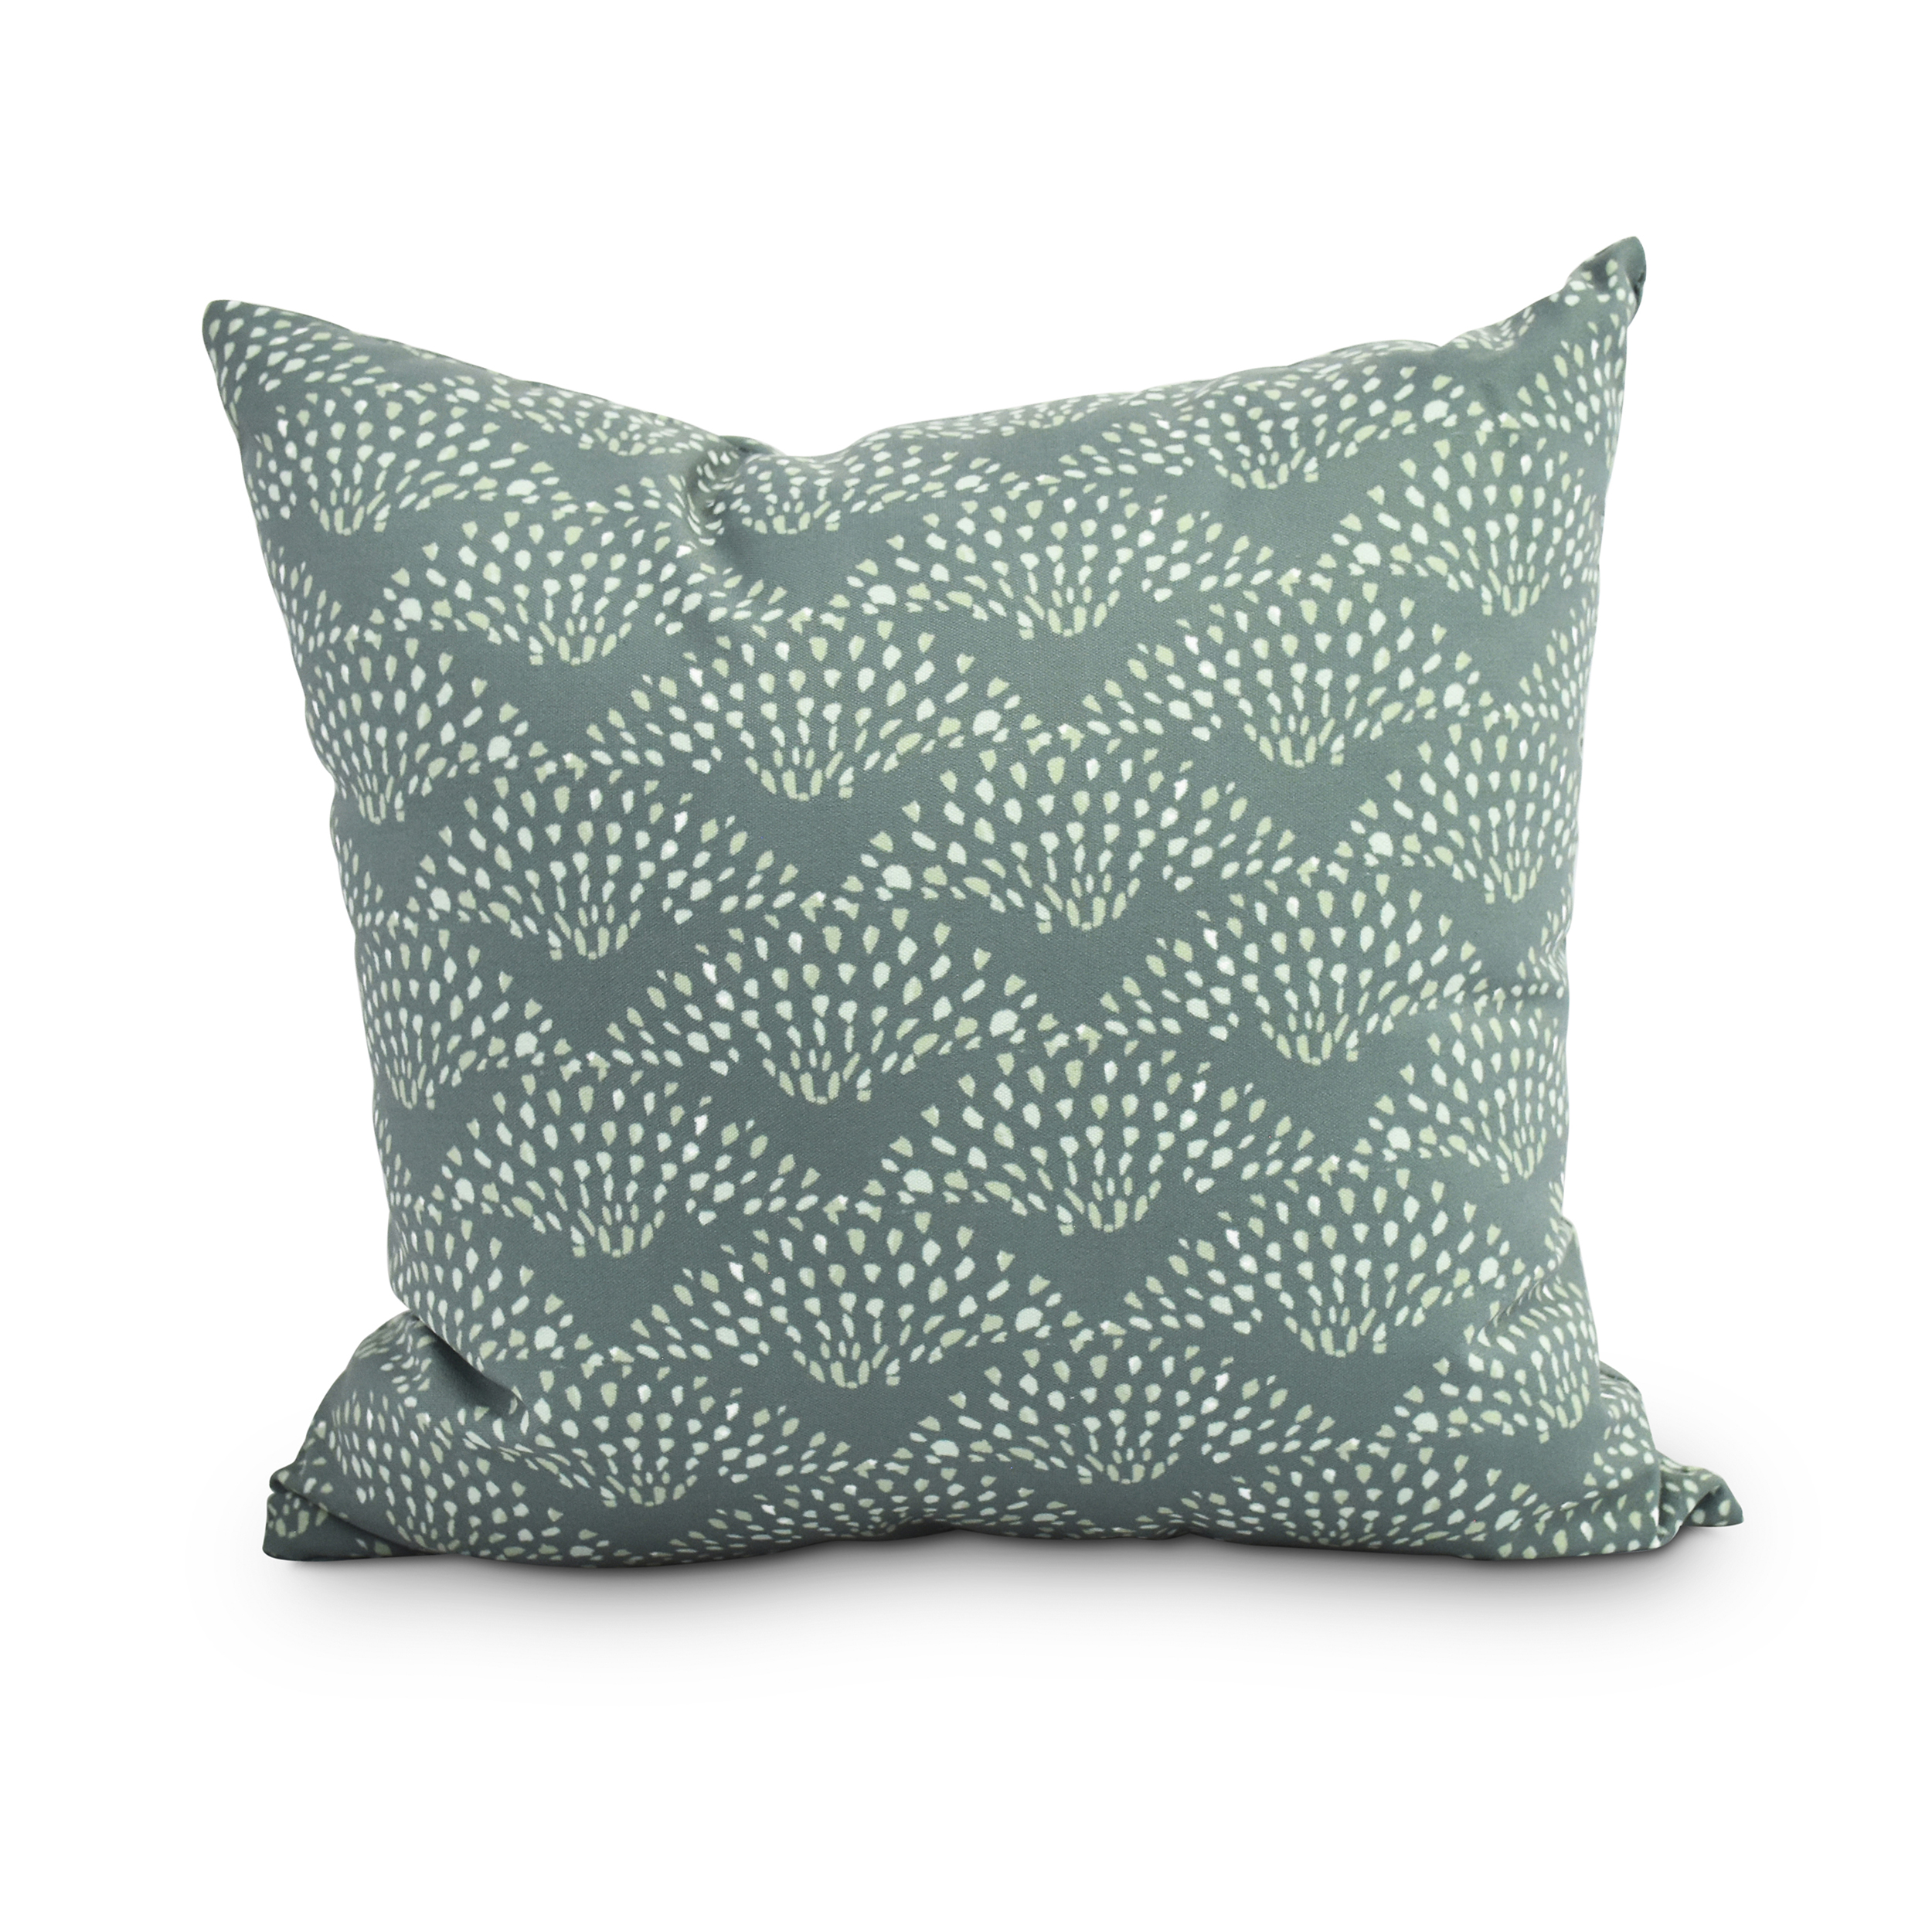 Simply Daisy, 16" x 16" Fan Dance Green Geometric Print Decorative Outdoor Throw Pillow - image 1 of 2